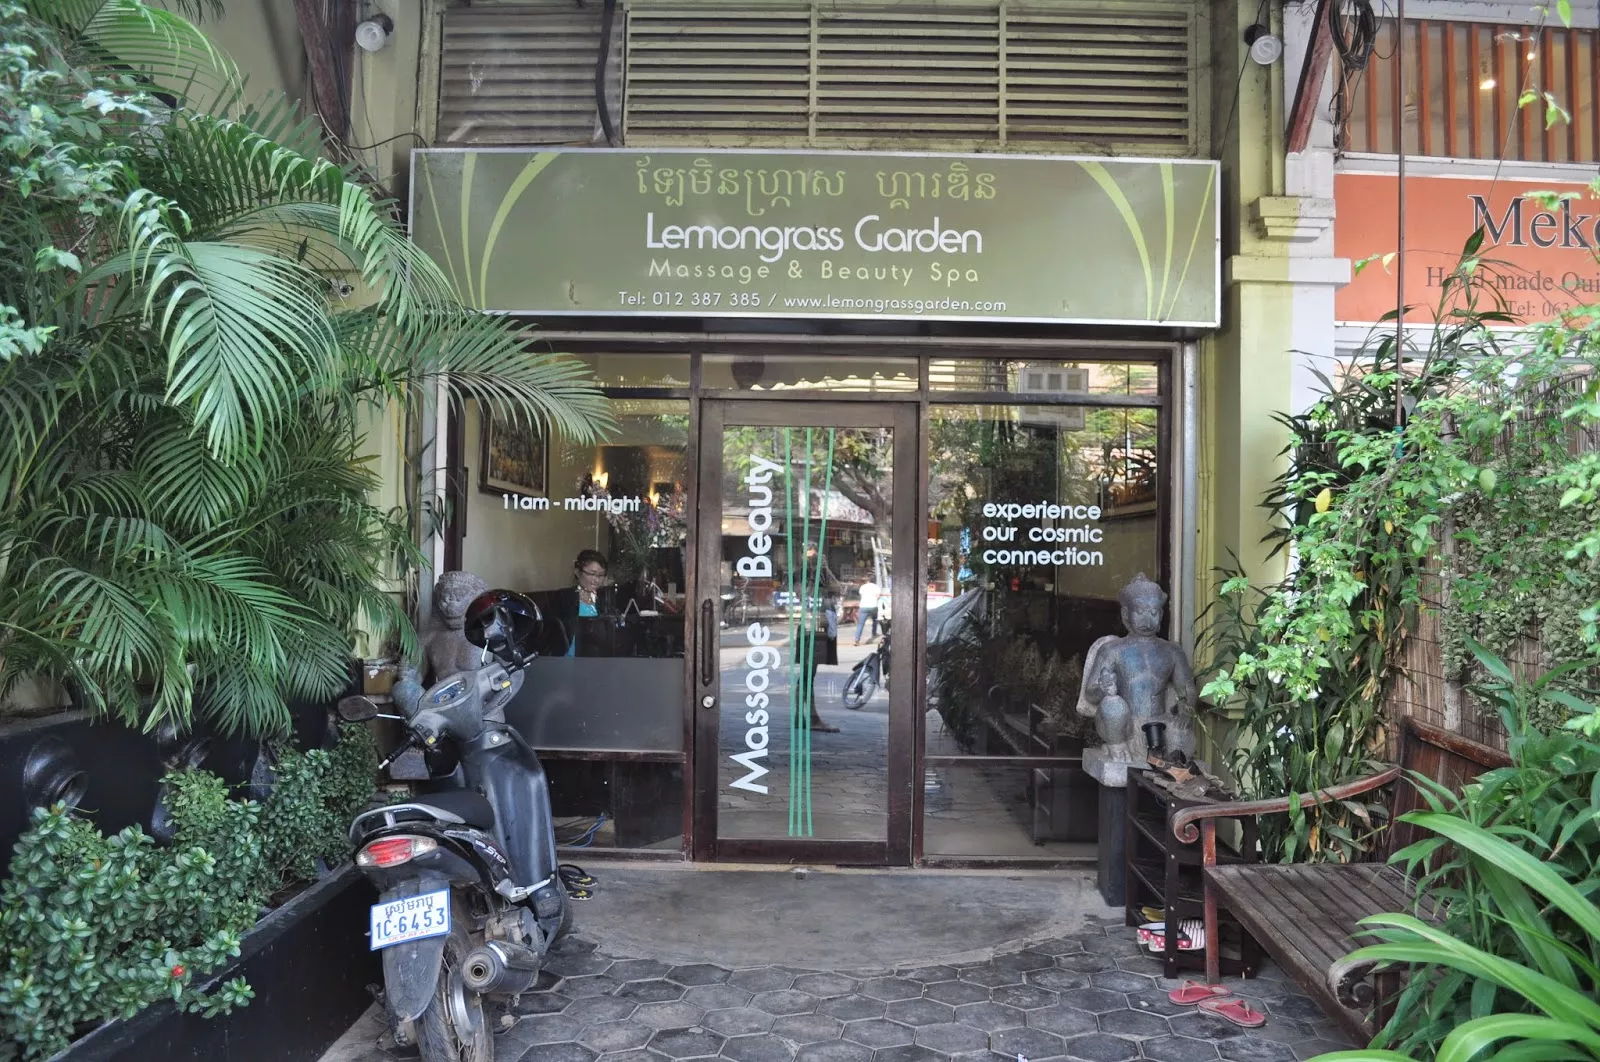 Lemongrass Garden Beauty & Massage in Cambodia, East Asia | Massages - Rated 5